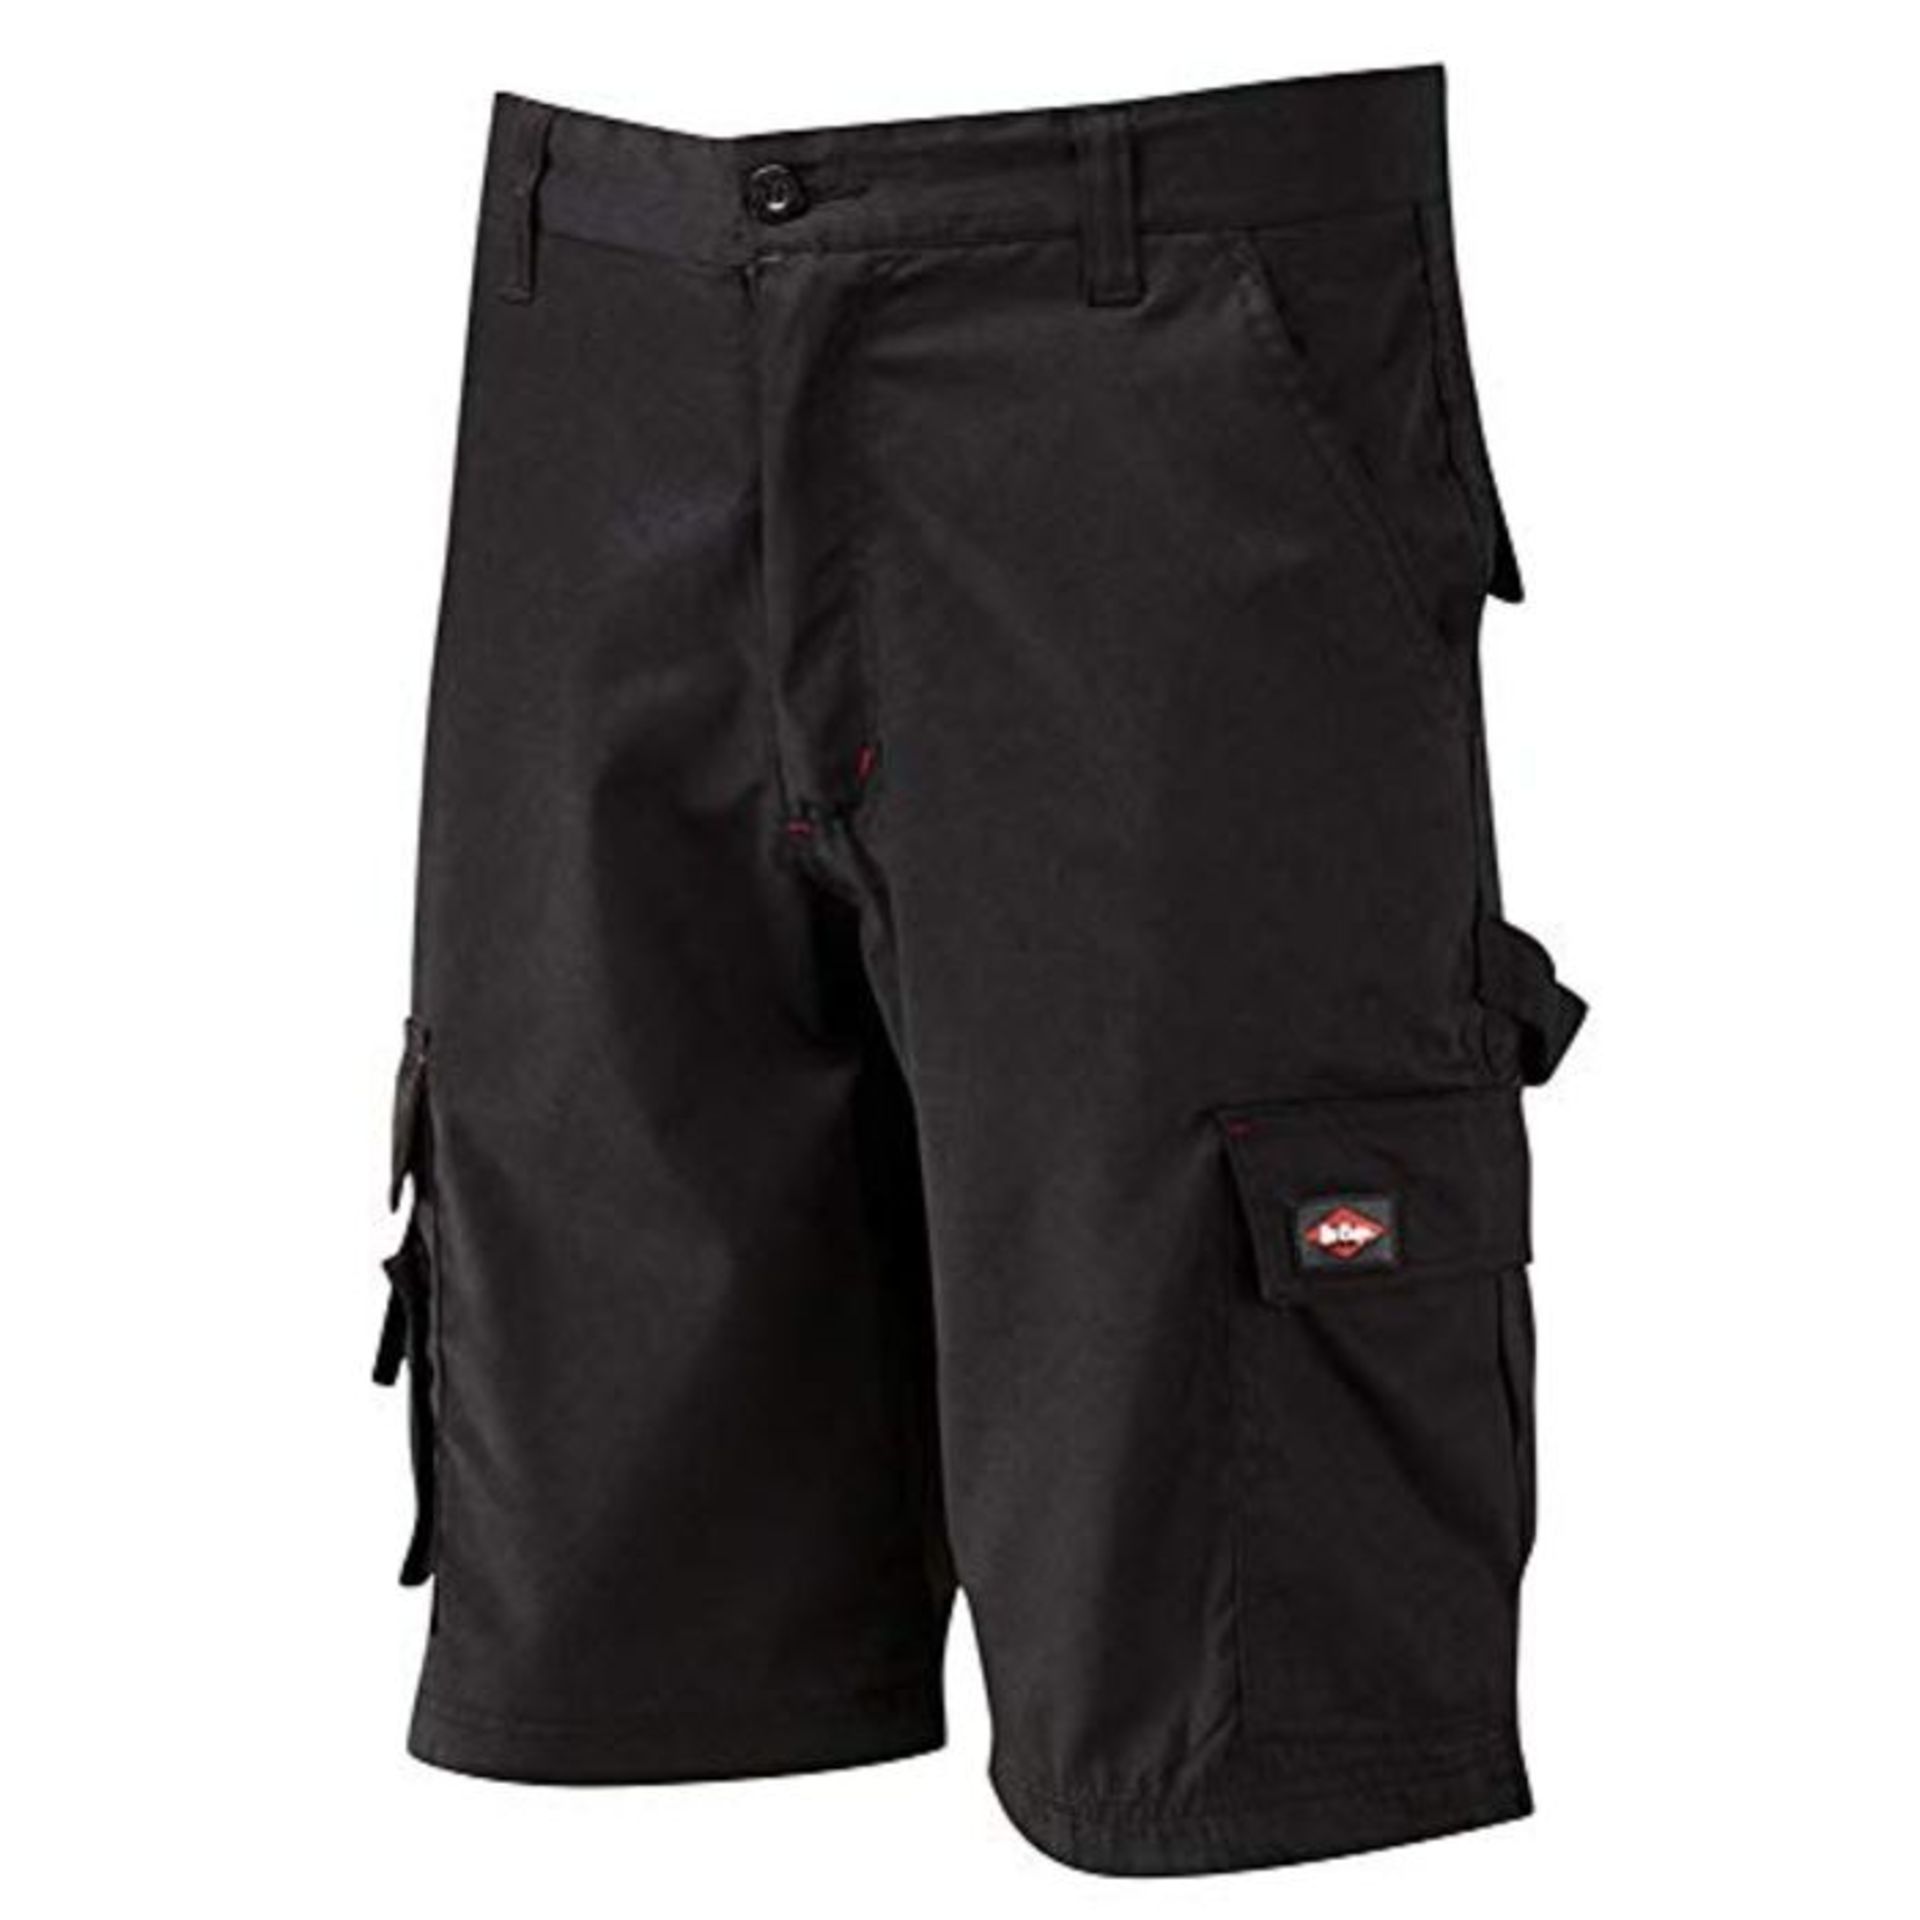 Lee Cooper LCSHO806 Mens Multi Pocket Work Safety Pants Cargo Shorts, Black, Size 42